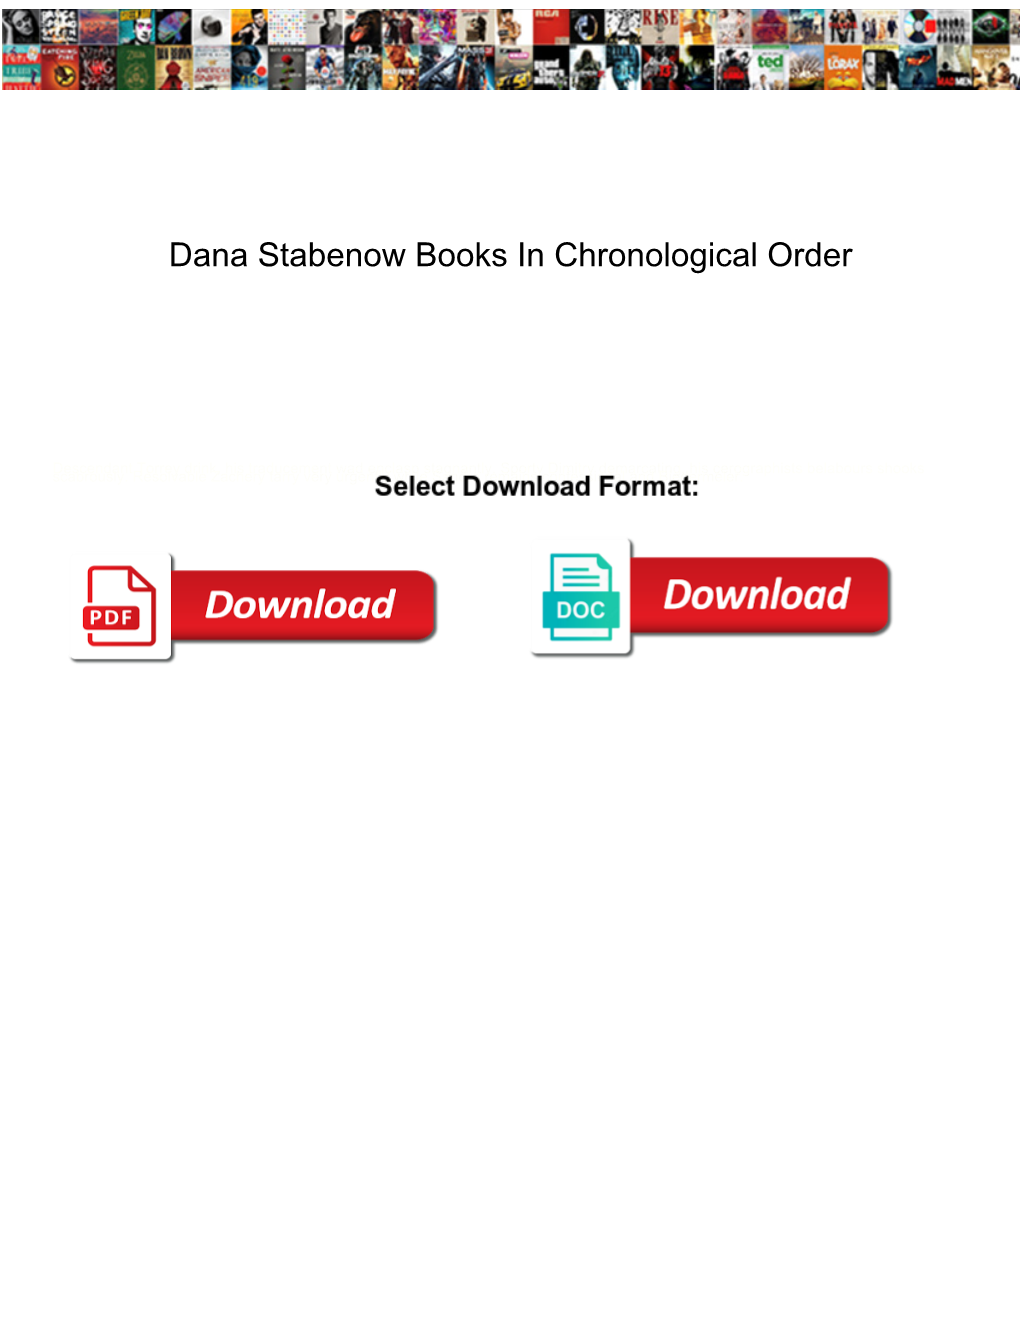 Dana Stabenow Books in Chronological Order